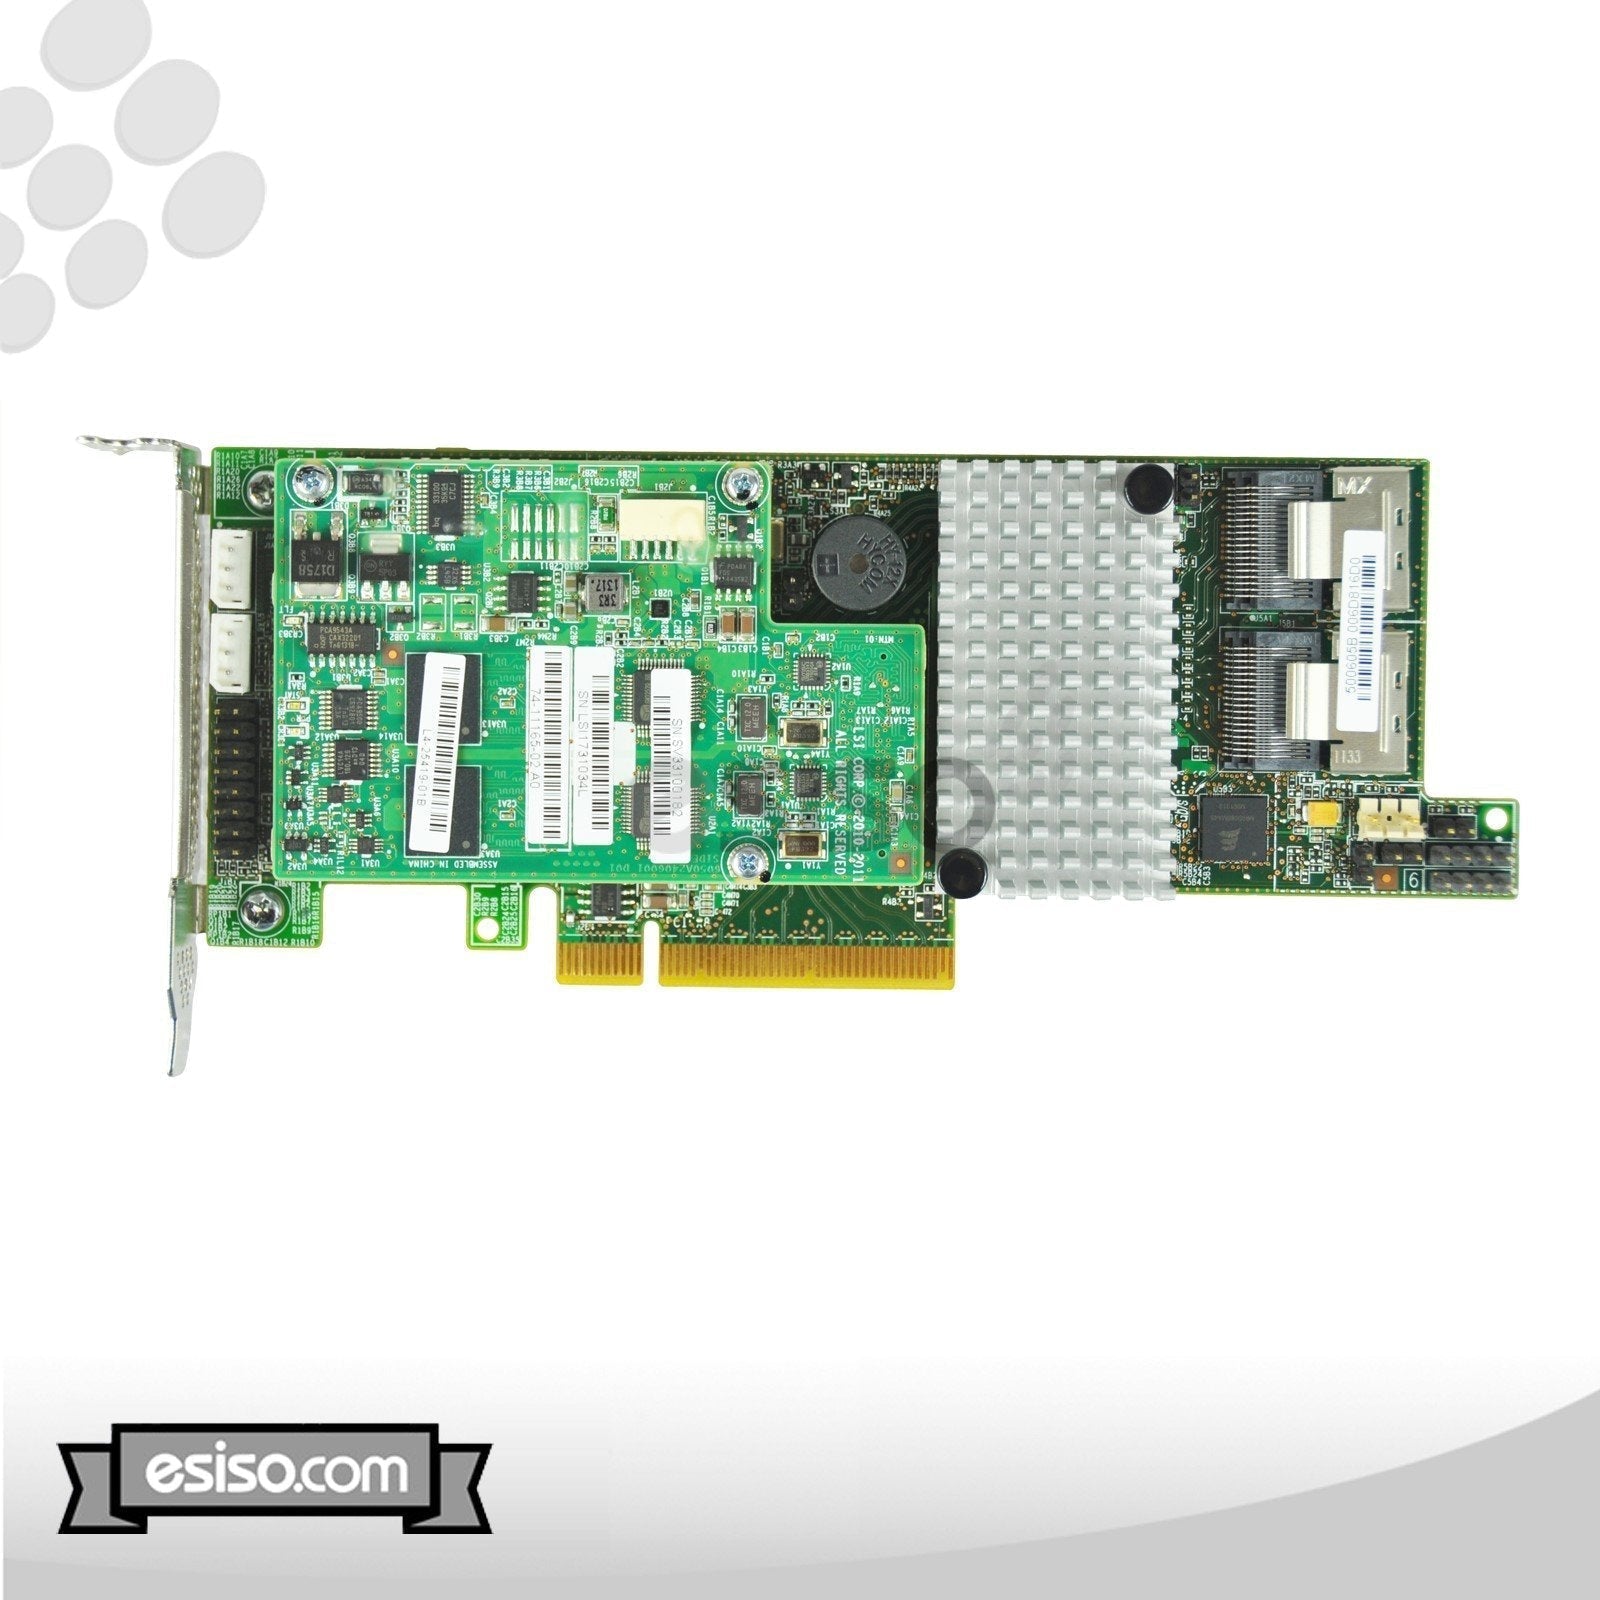 SAS9271-8I LSI MEGARAID SAS 9271-8I 6GB/S PCIE RAID CONTROLLER W/ BOTH BRACKET